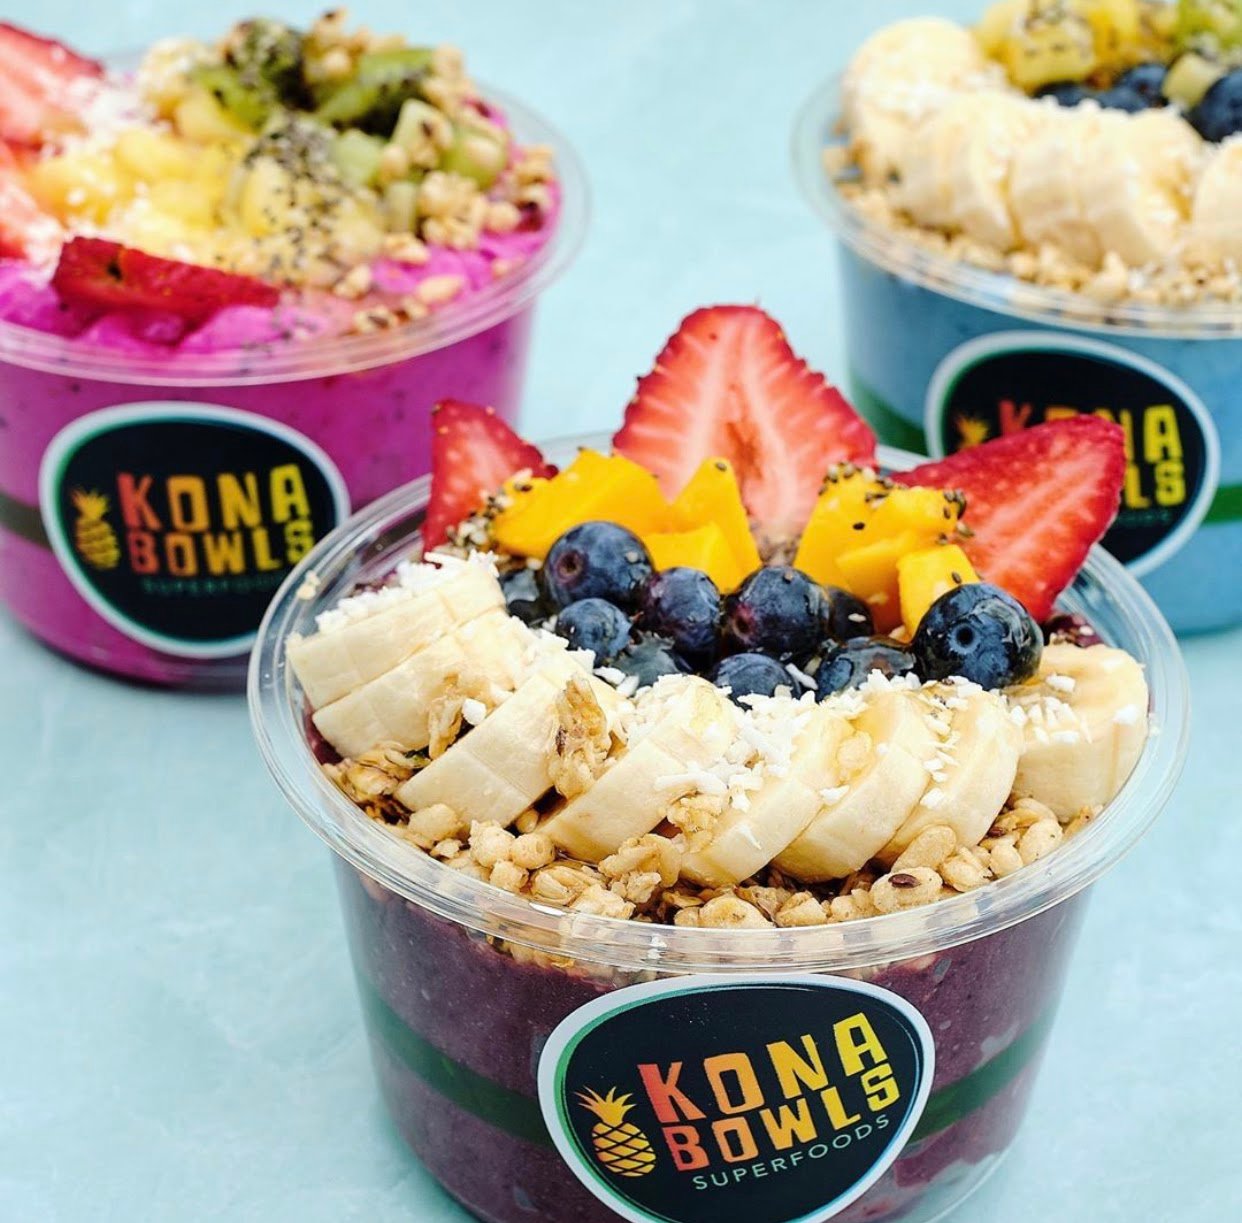 kona bowls superfoods acai bowl with banana and fresh berries 